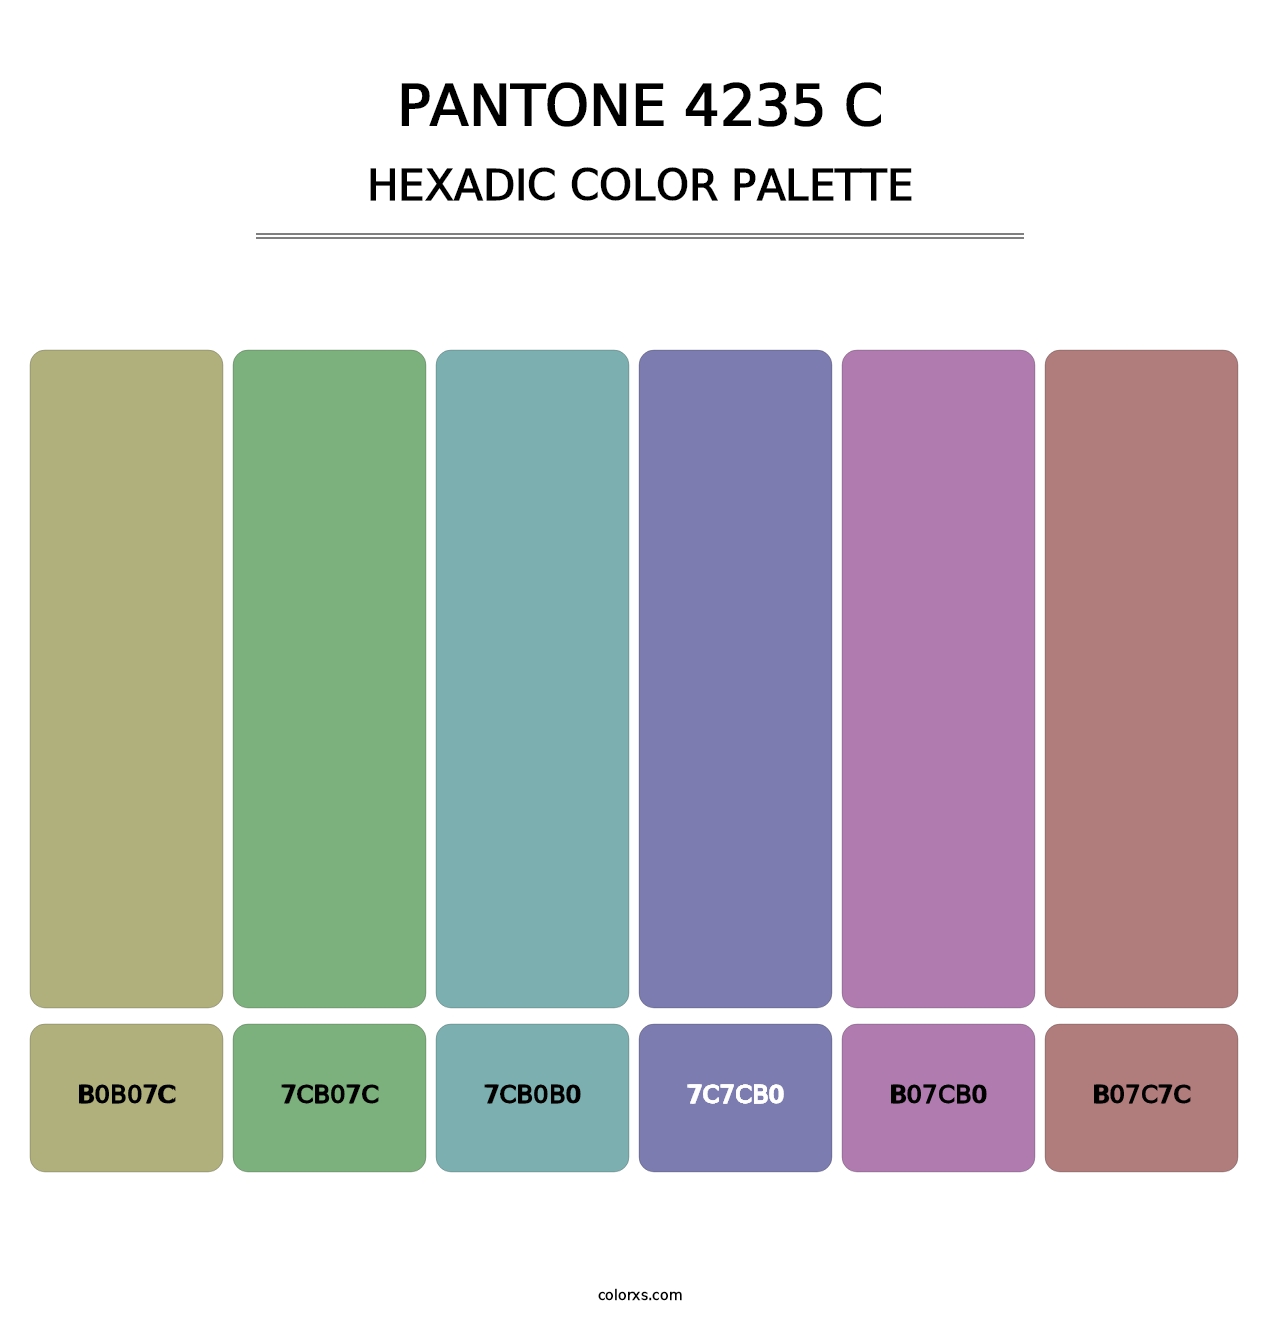 PANTONE 4235 C - Hexadic Color Palette